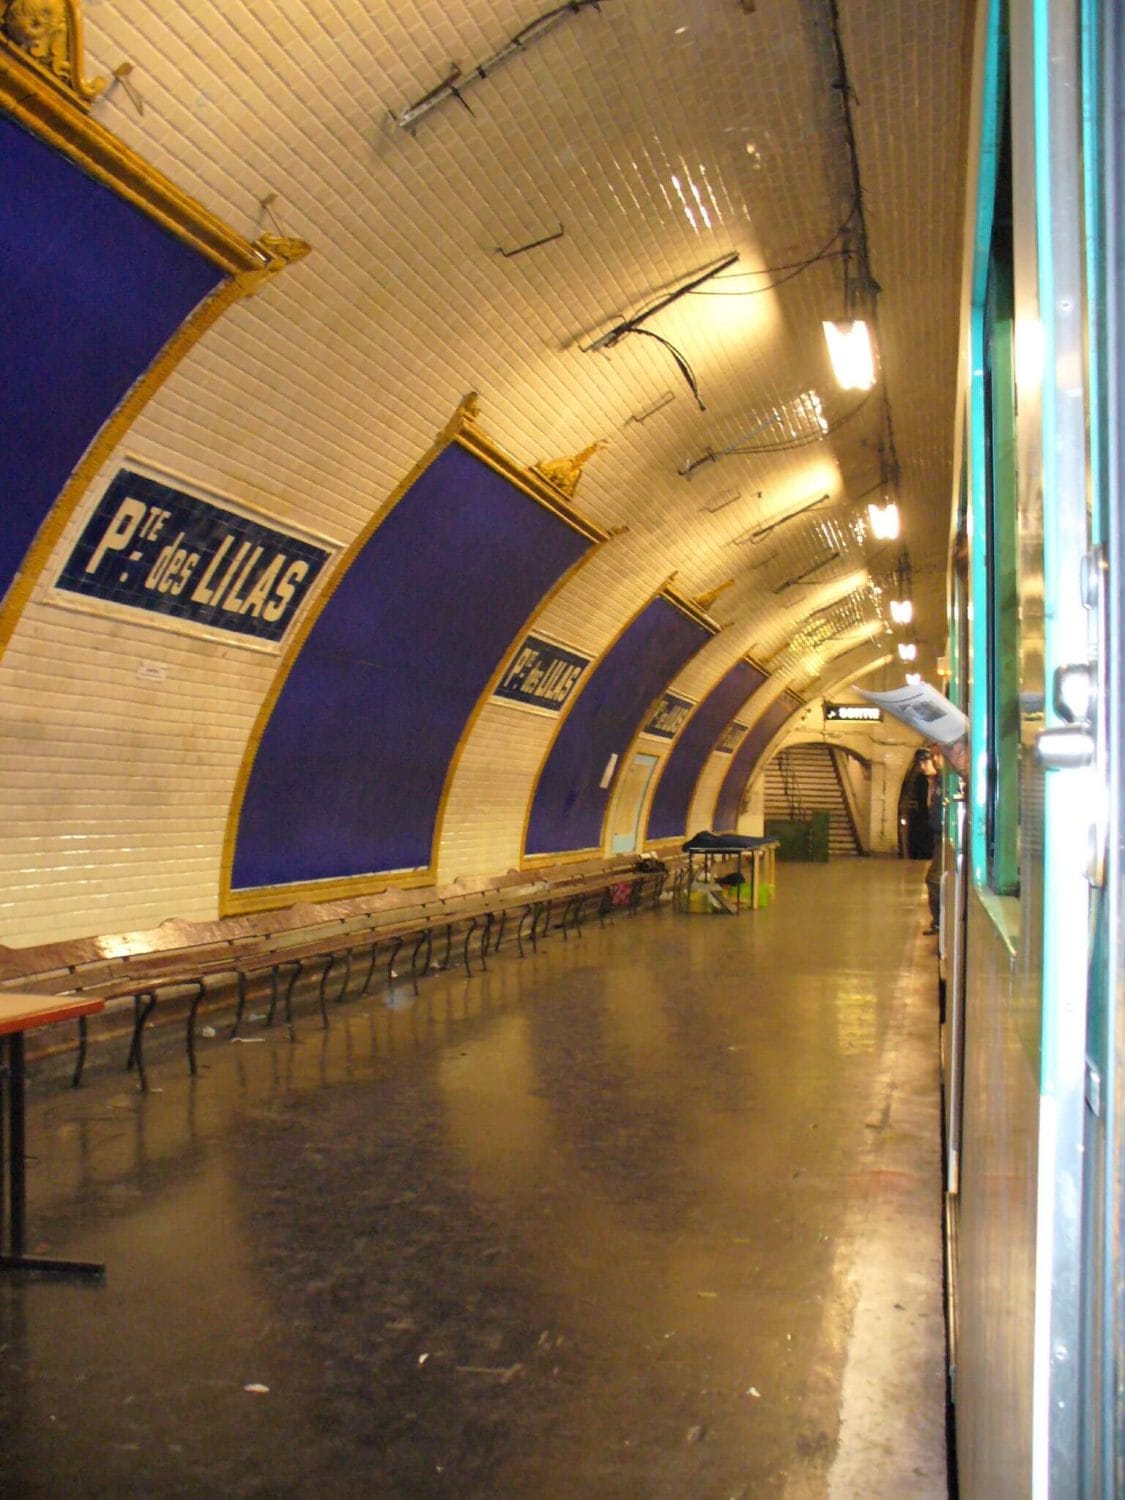 Porte des Lilas cinema station - Photo Wikimedia Commons by Yann Caradec